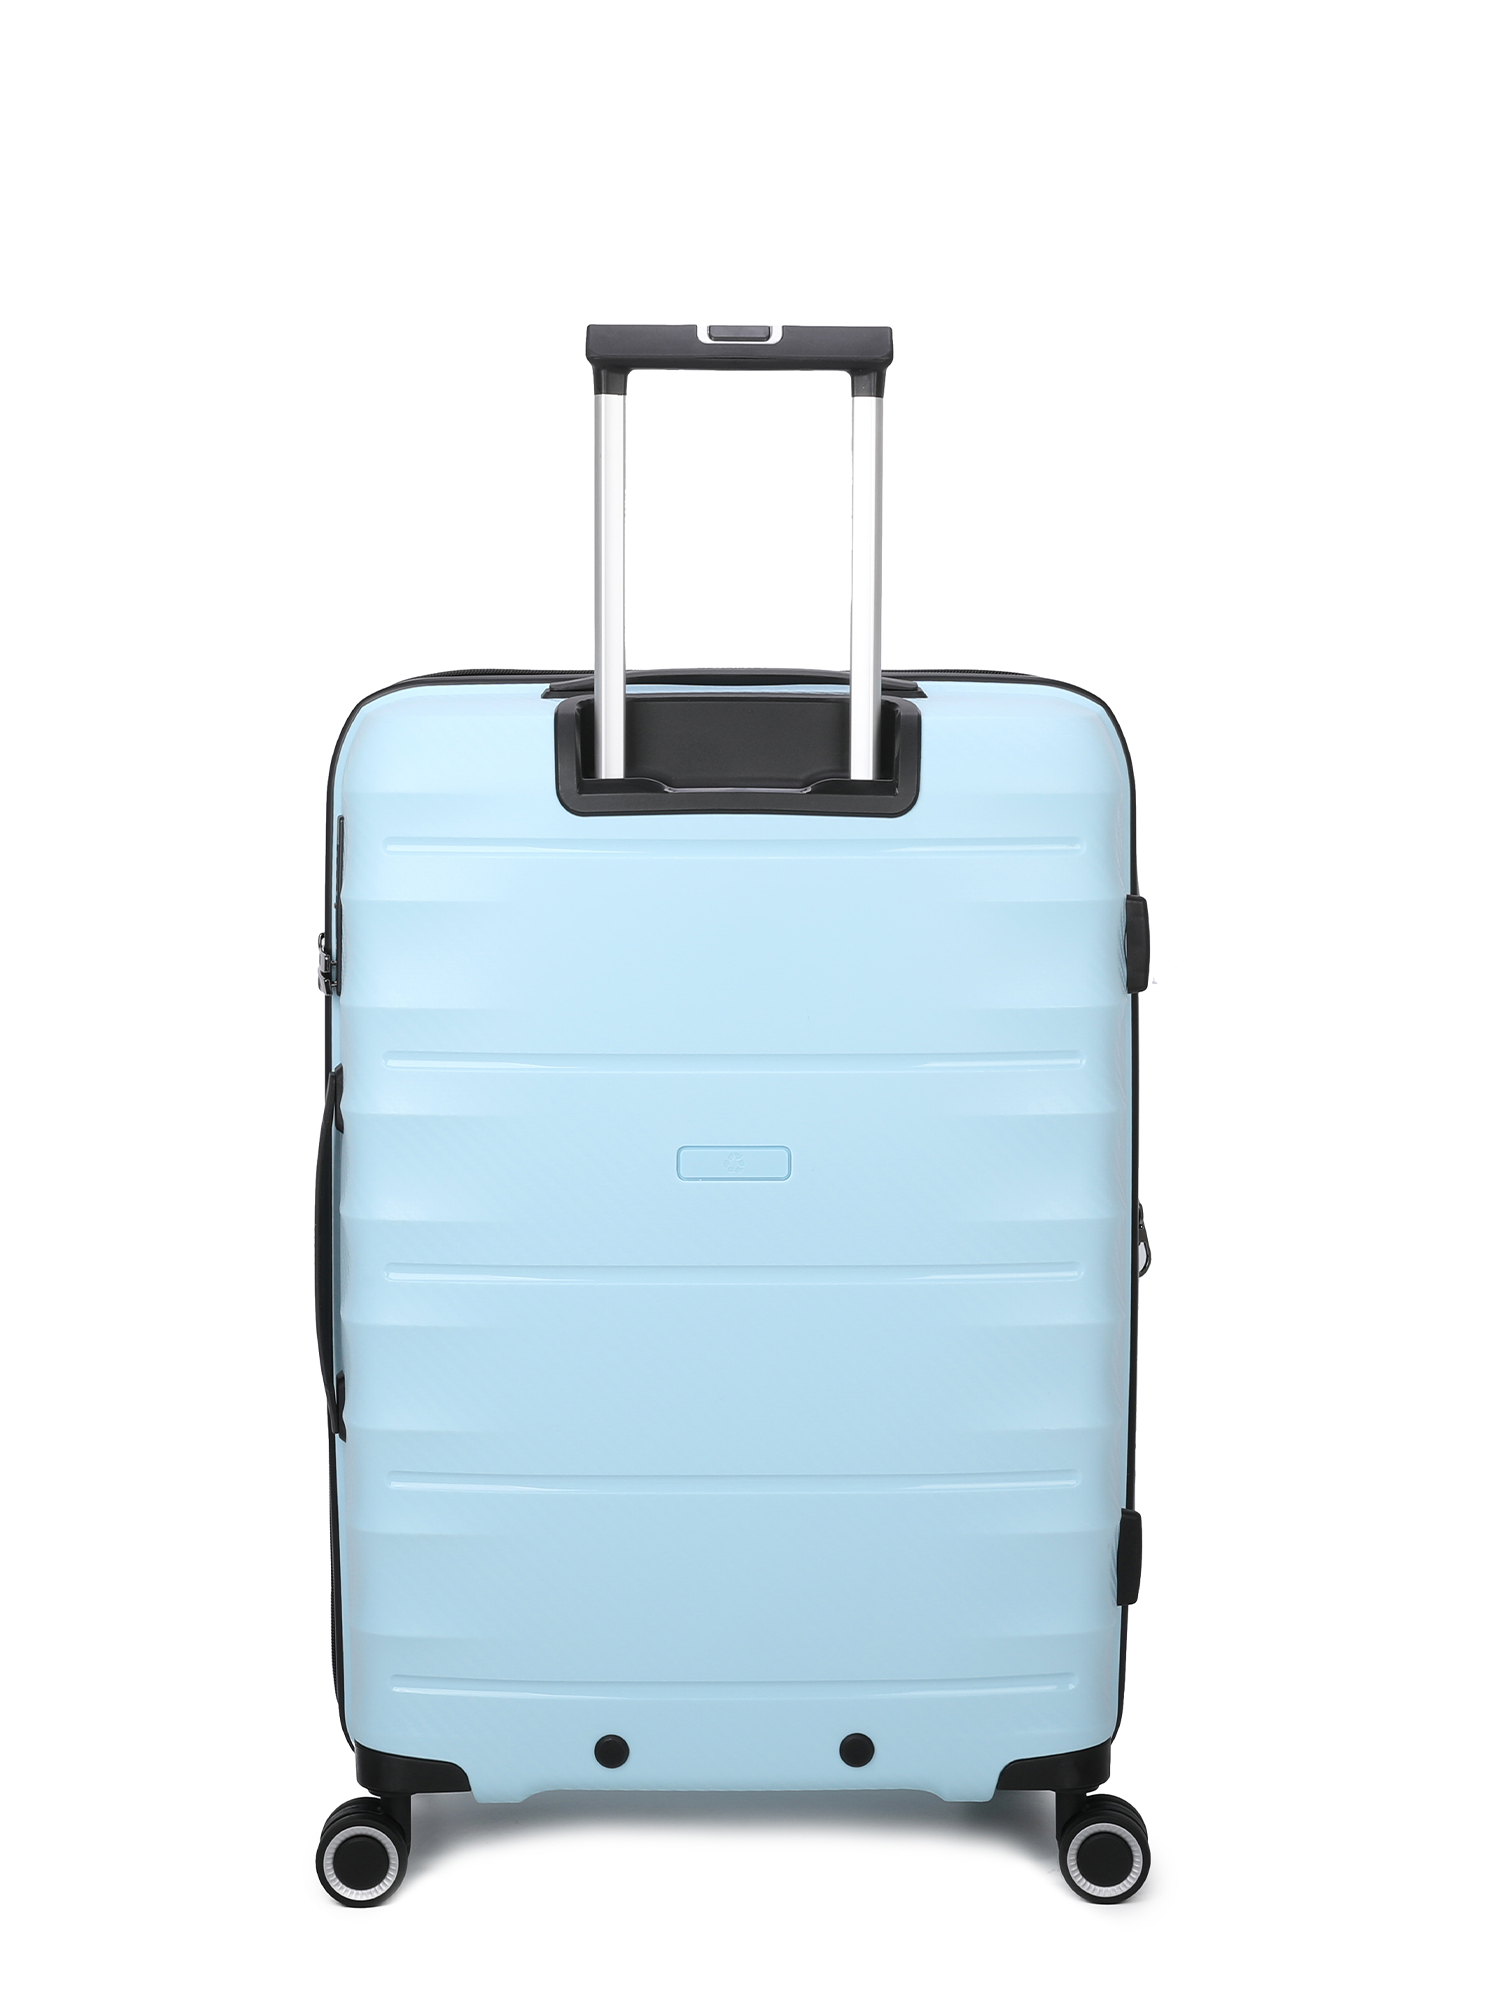 NZTourist Pro Traveller 65cm Suitcase - White